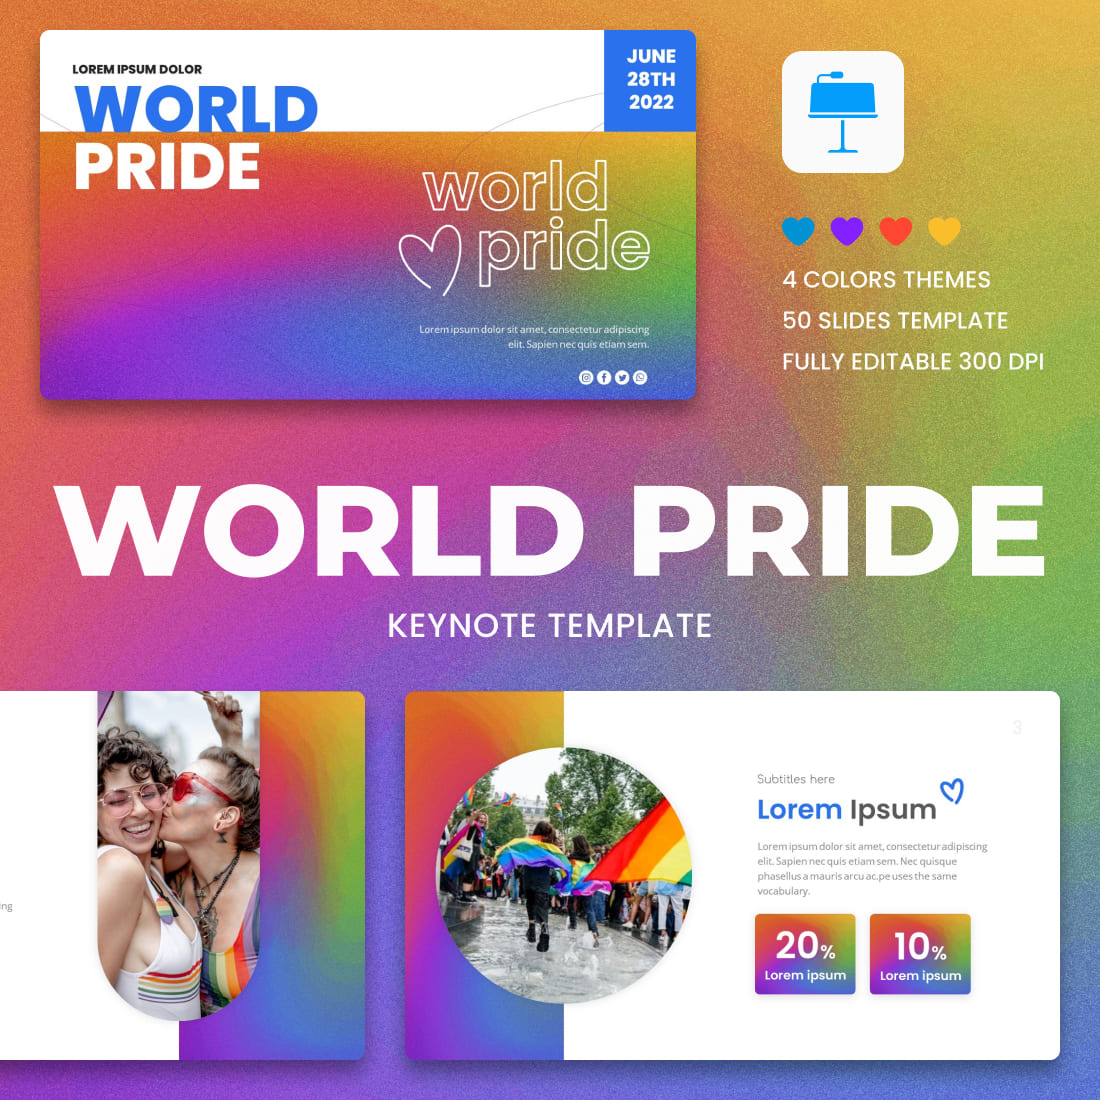 World Pride Keynote Template.